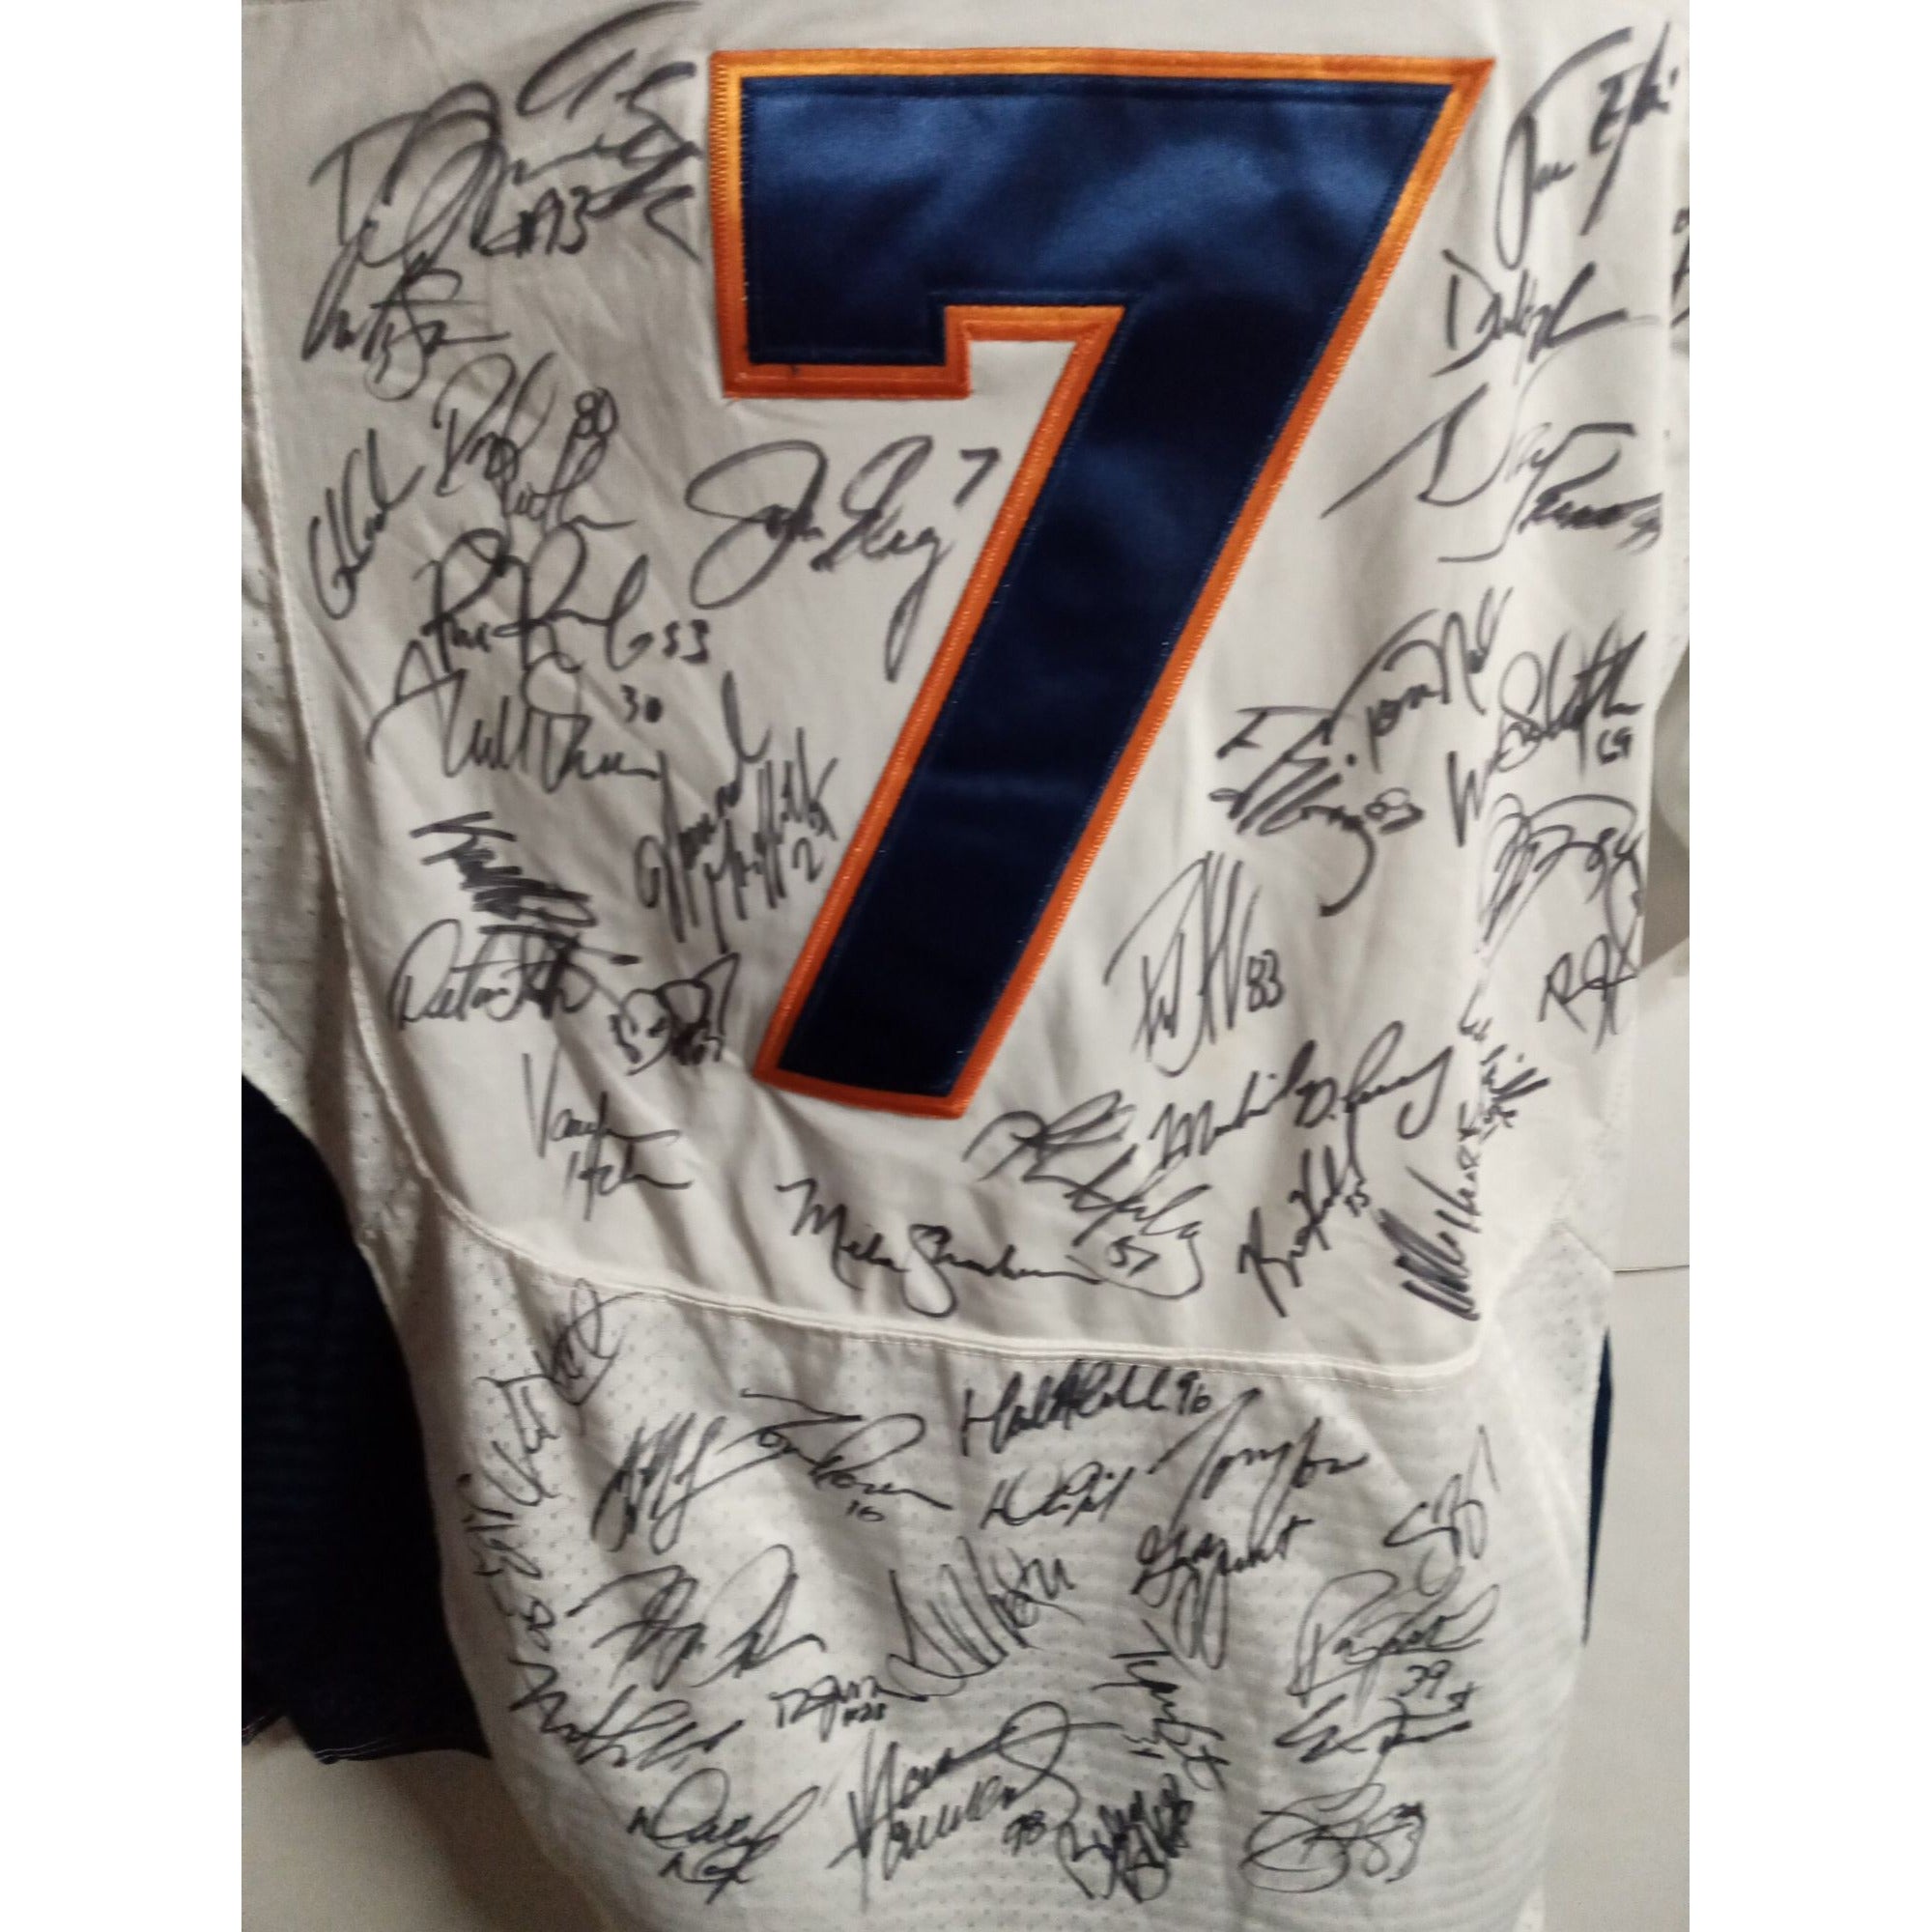 John Elway Denver Broncos Super Bowl champions team signed jersey with proof